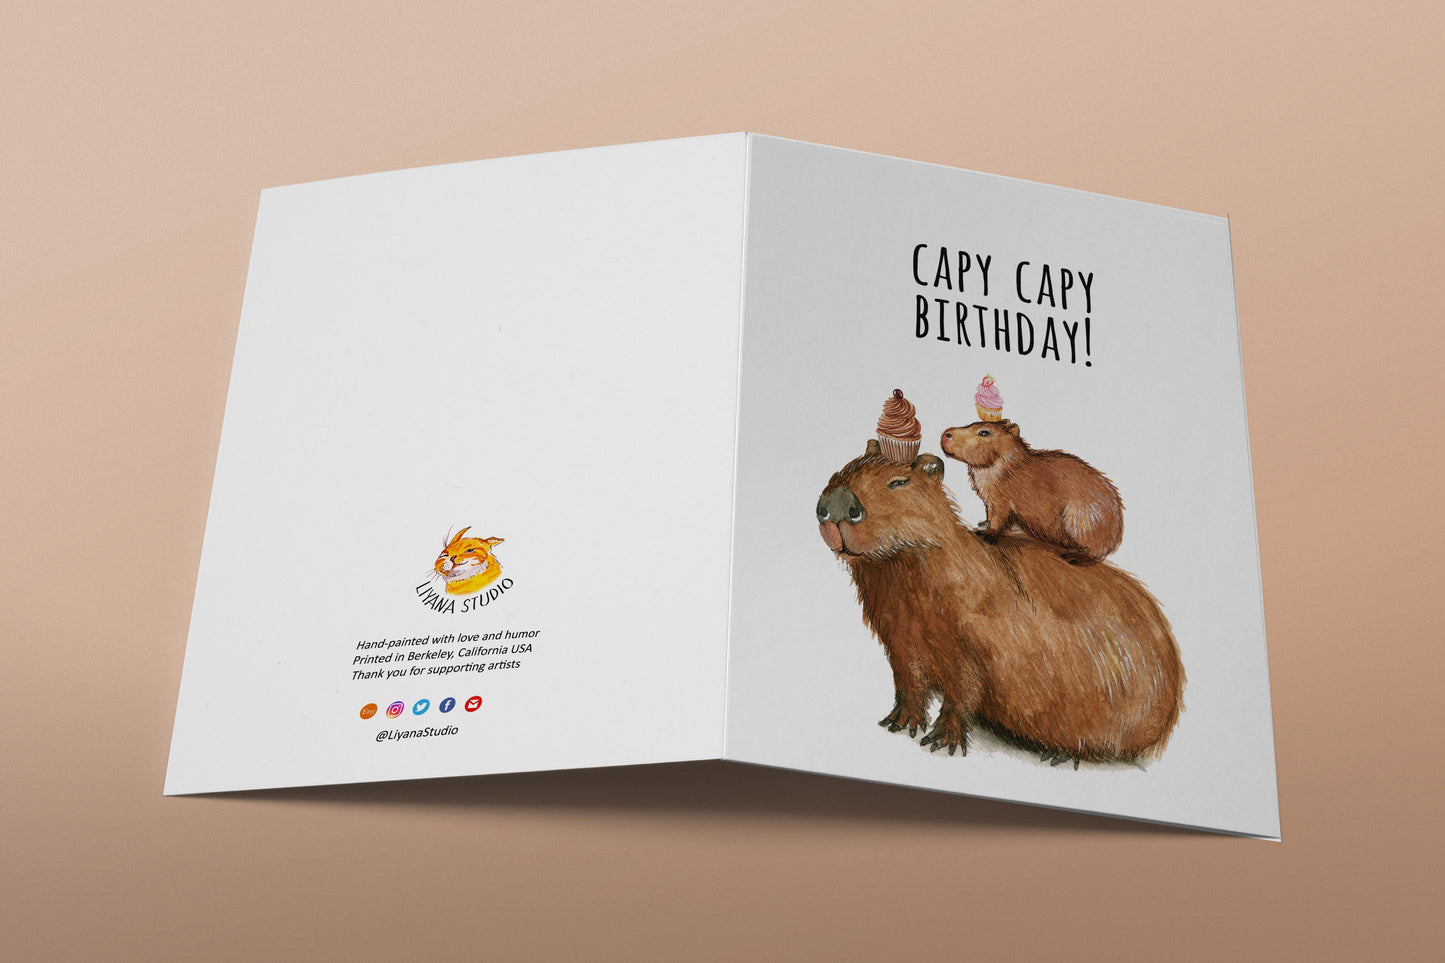 Capybara Birthday Card For Friends - Capy Birthday Puns - Mom And Baby Birthday Cards Funny